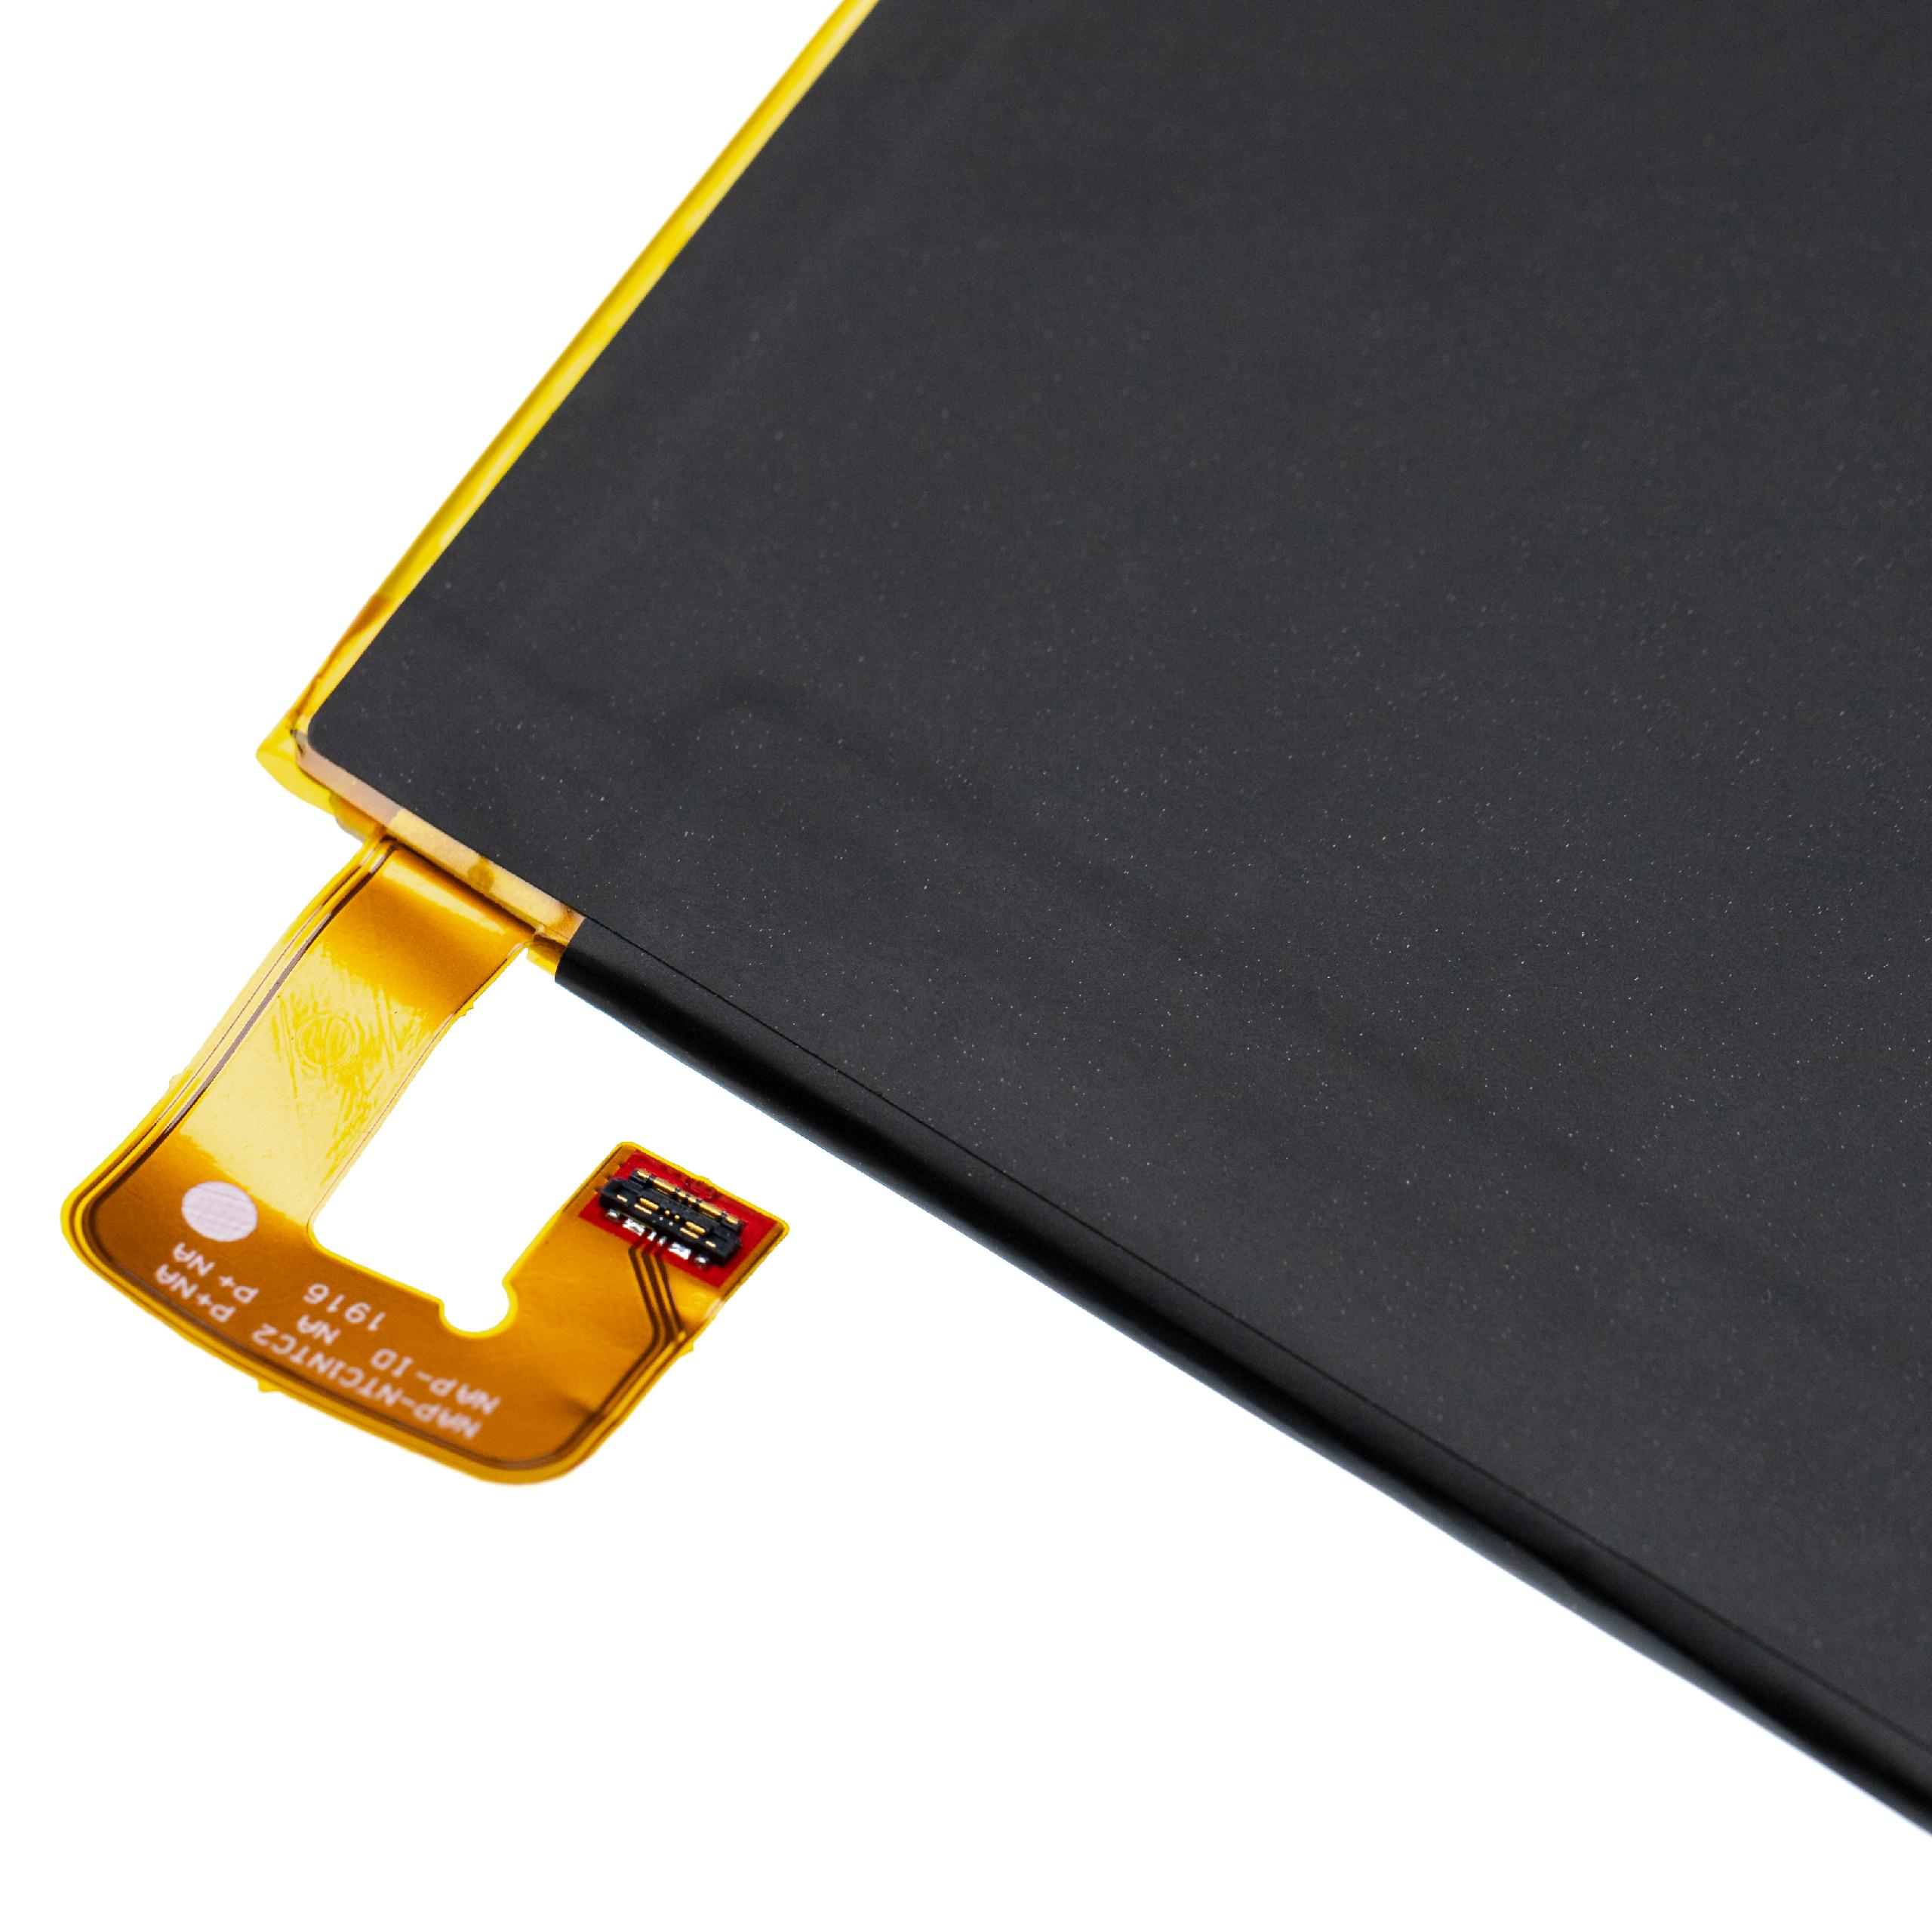 Tablet, Lenovo Akku Ersatz für für - Li-Polymer 4750 L16D1P34 Volt, VHBW 3.85